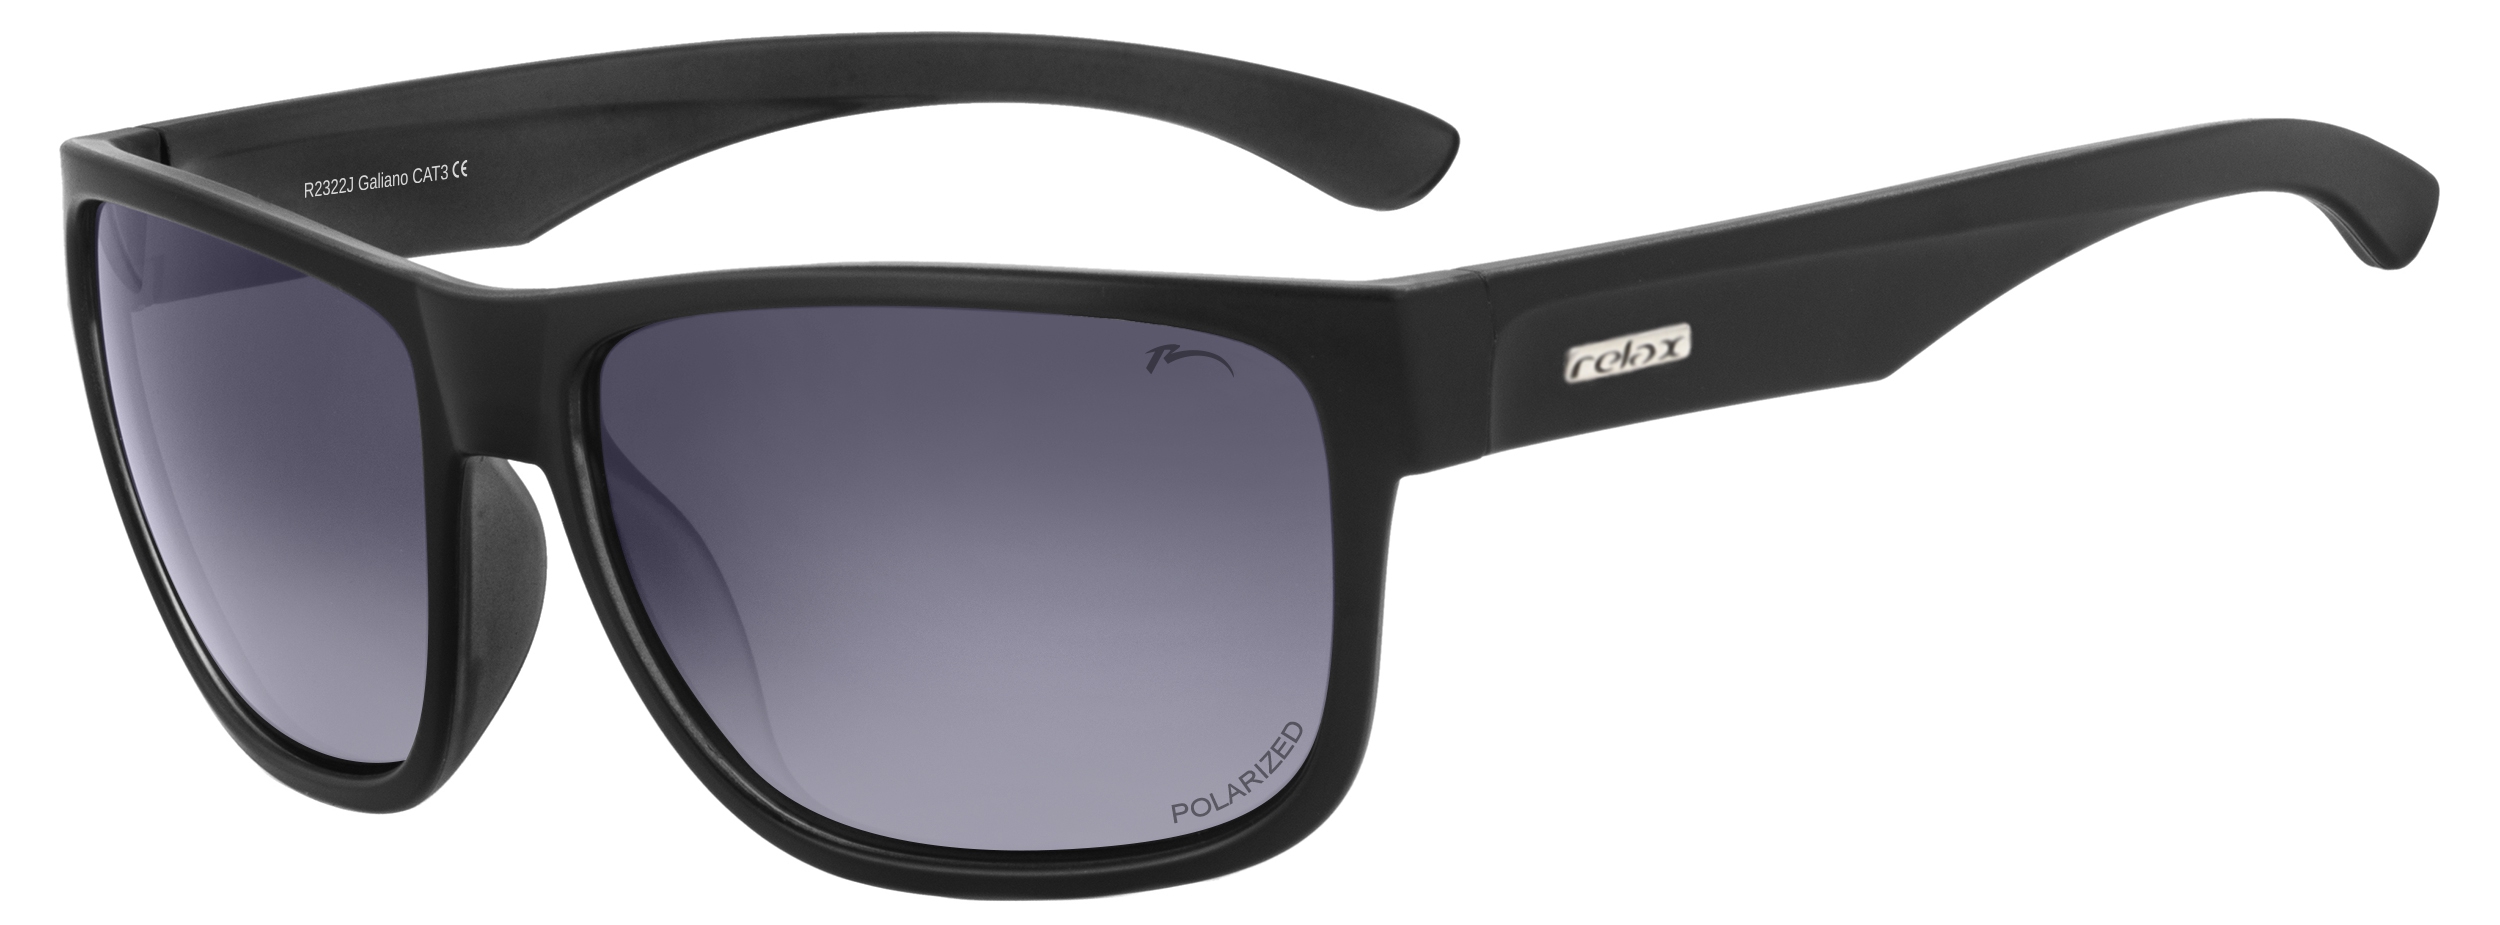 Polarized sunglasses  Relax Galiano R2322J standard